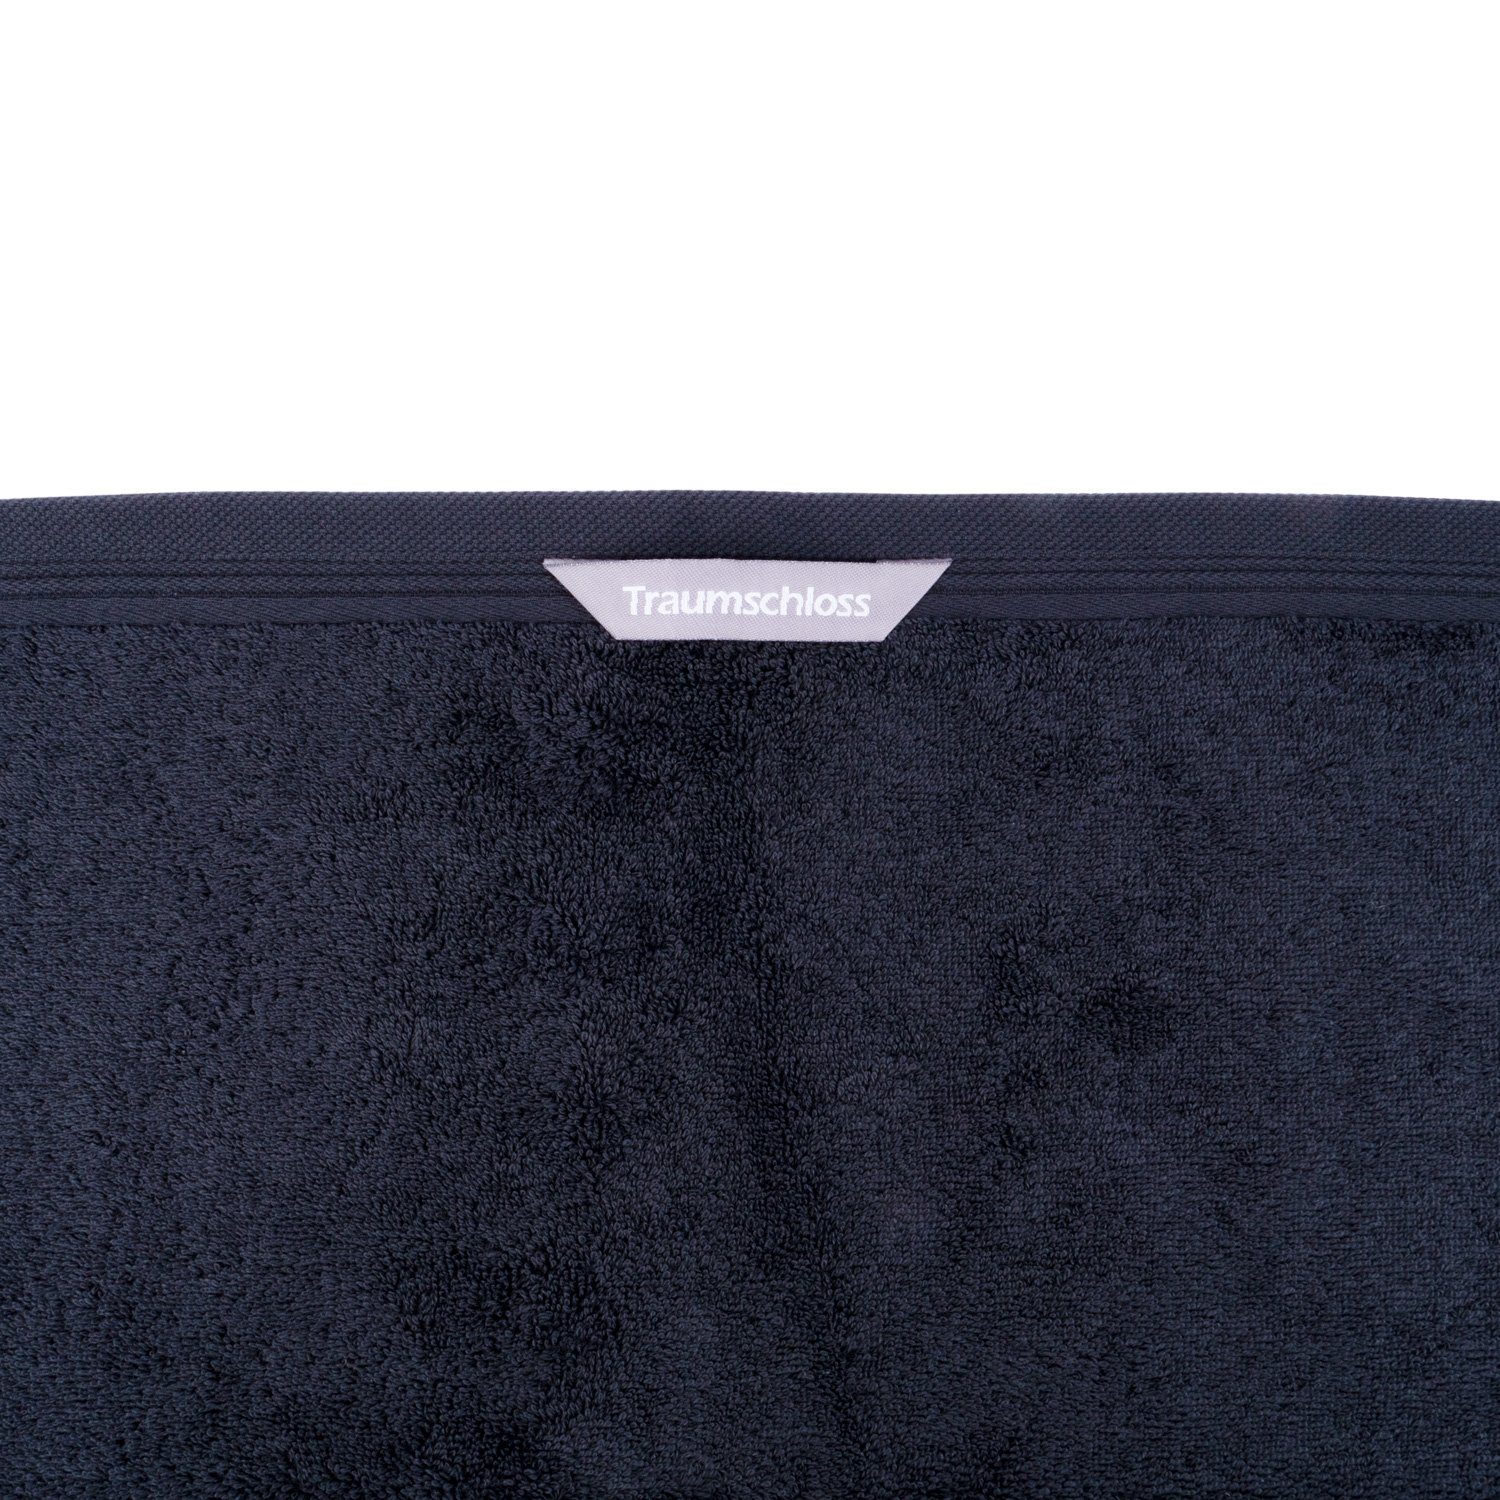 Frottier (1-St), Haut Flauschig schwarz Frottier-Line, Traumschloss & weich angenehm Handtuch zur